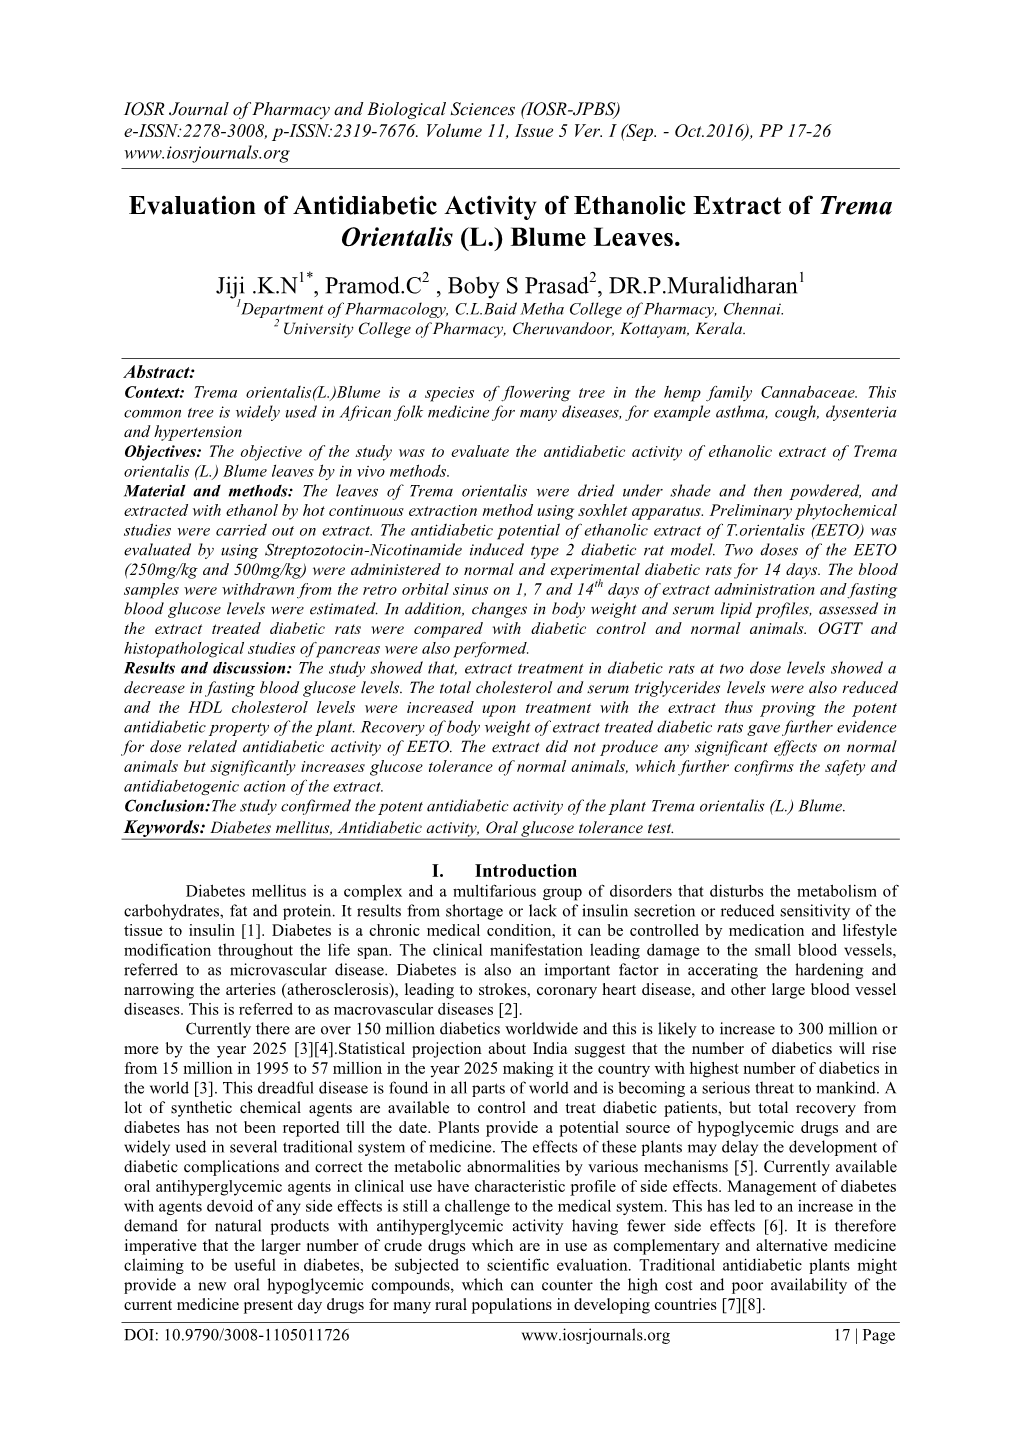 Evaluation of Antidiabetic Activity of Ethanolic Extract of Trema Orientalis (L.) Blume Leaves